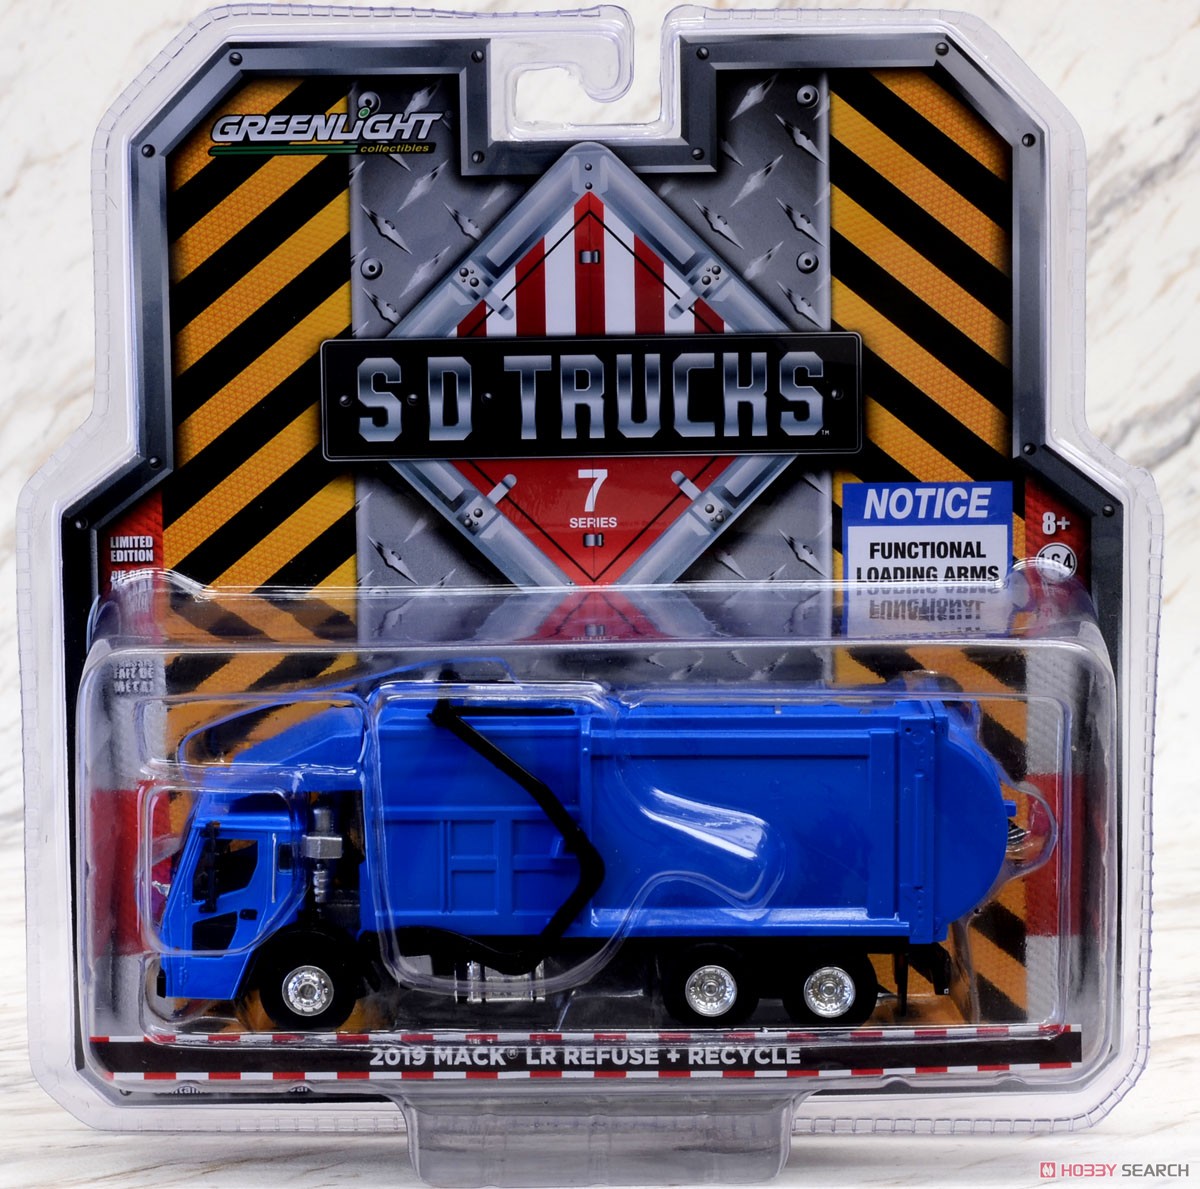 S.D.Trucks Series 7 (ミニカー) パッケージ3